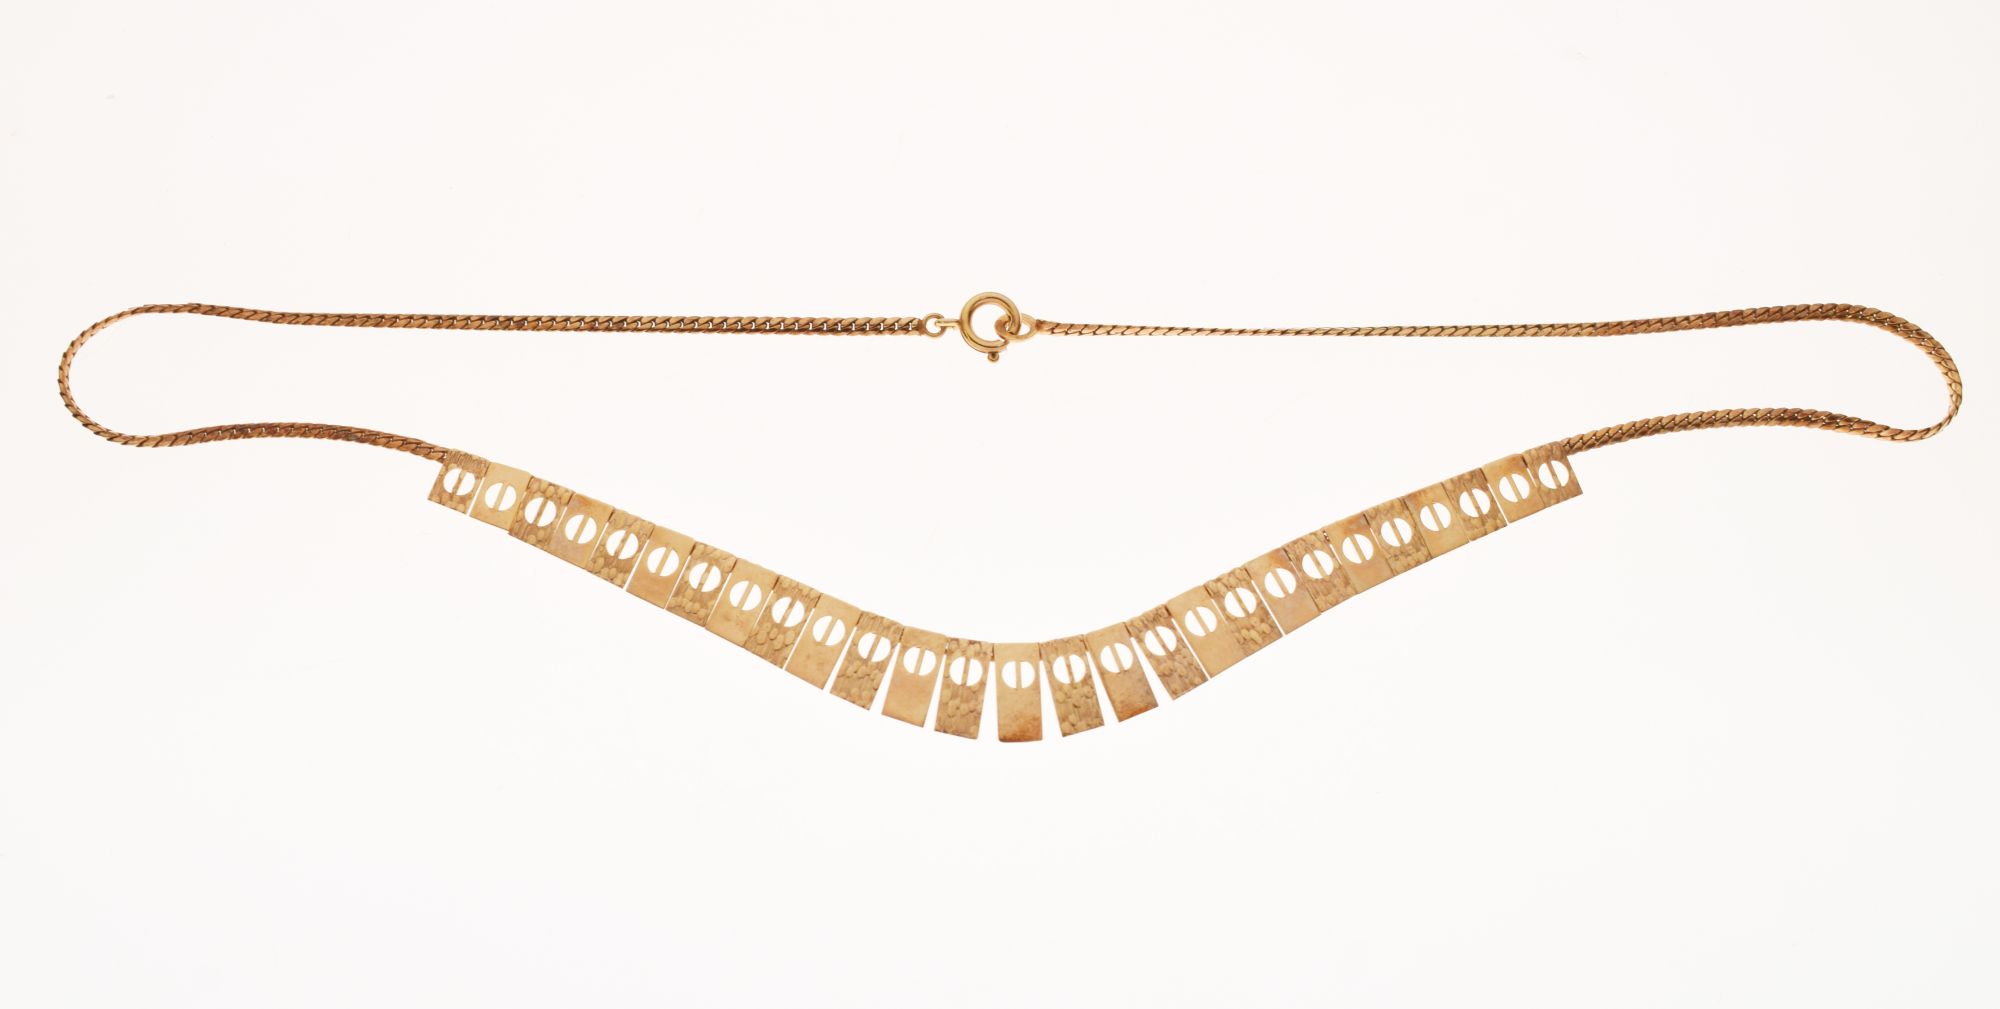 Vintage 9ct Gold Cleopatra Style Fringe Necklace, 42 cm / 16.5 inches, -  Ruby Lane